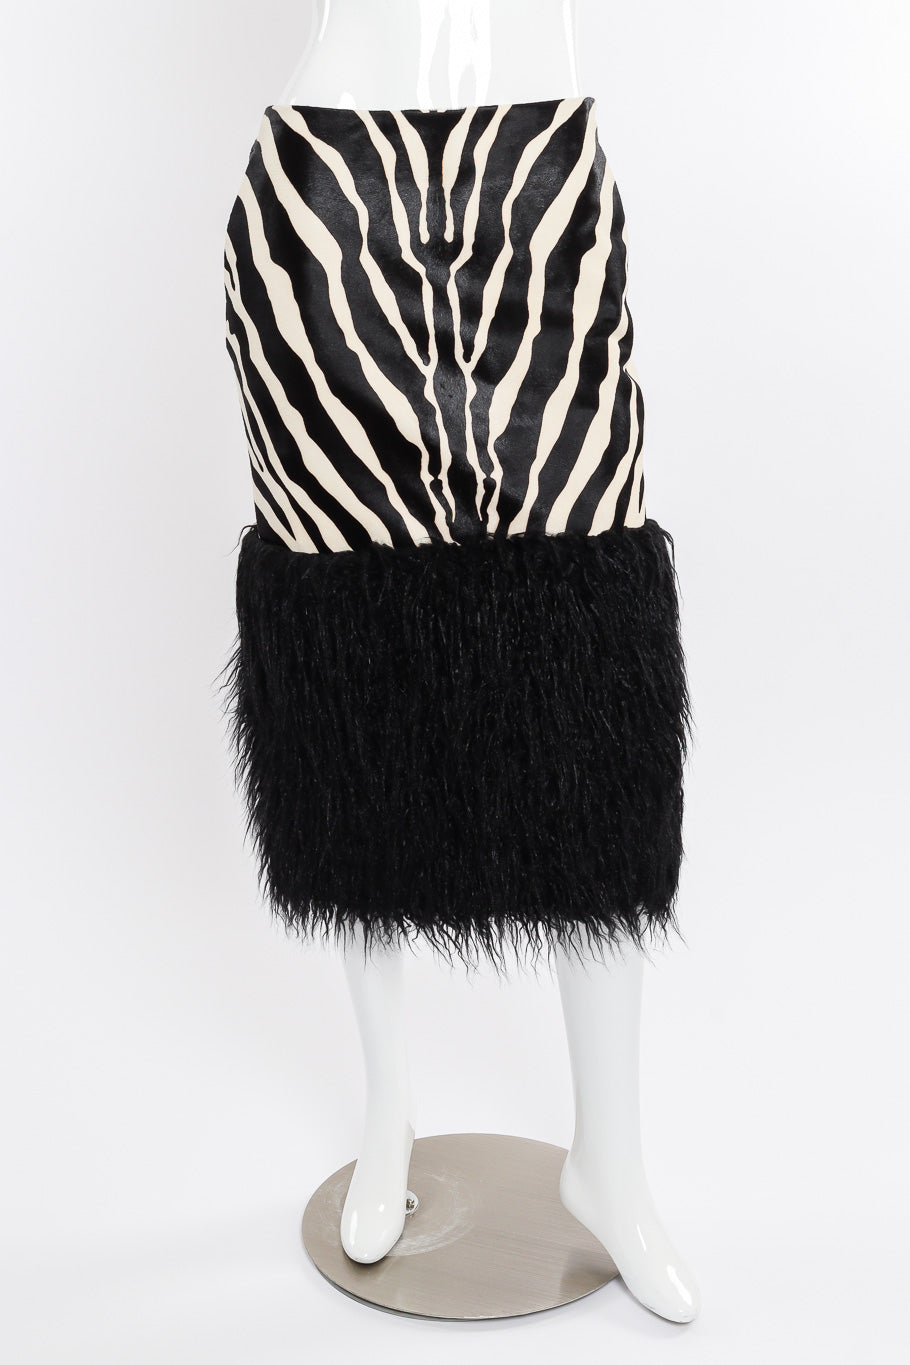 Saint Laurent 2019 F/W Zebra Print Midi Skirt front view on mannequin @Recessla